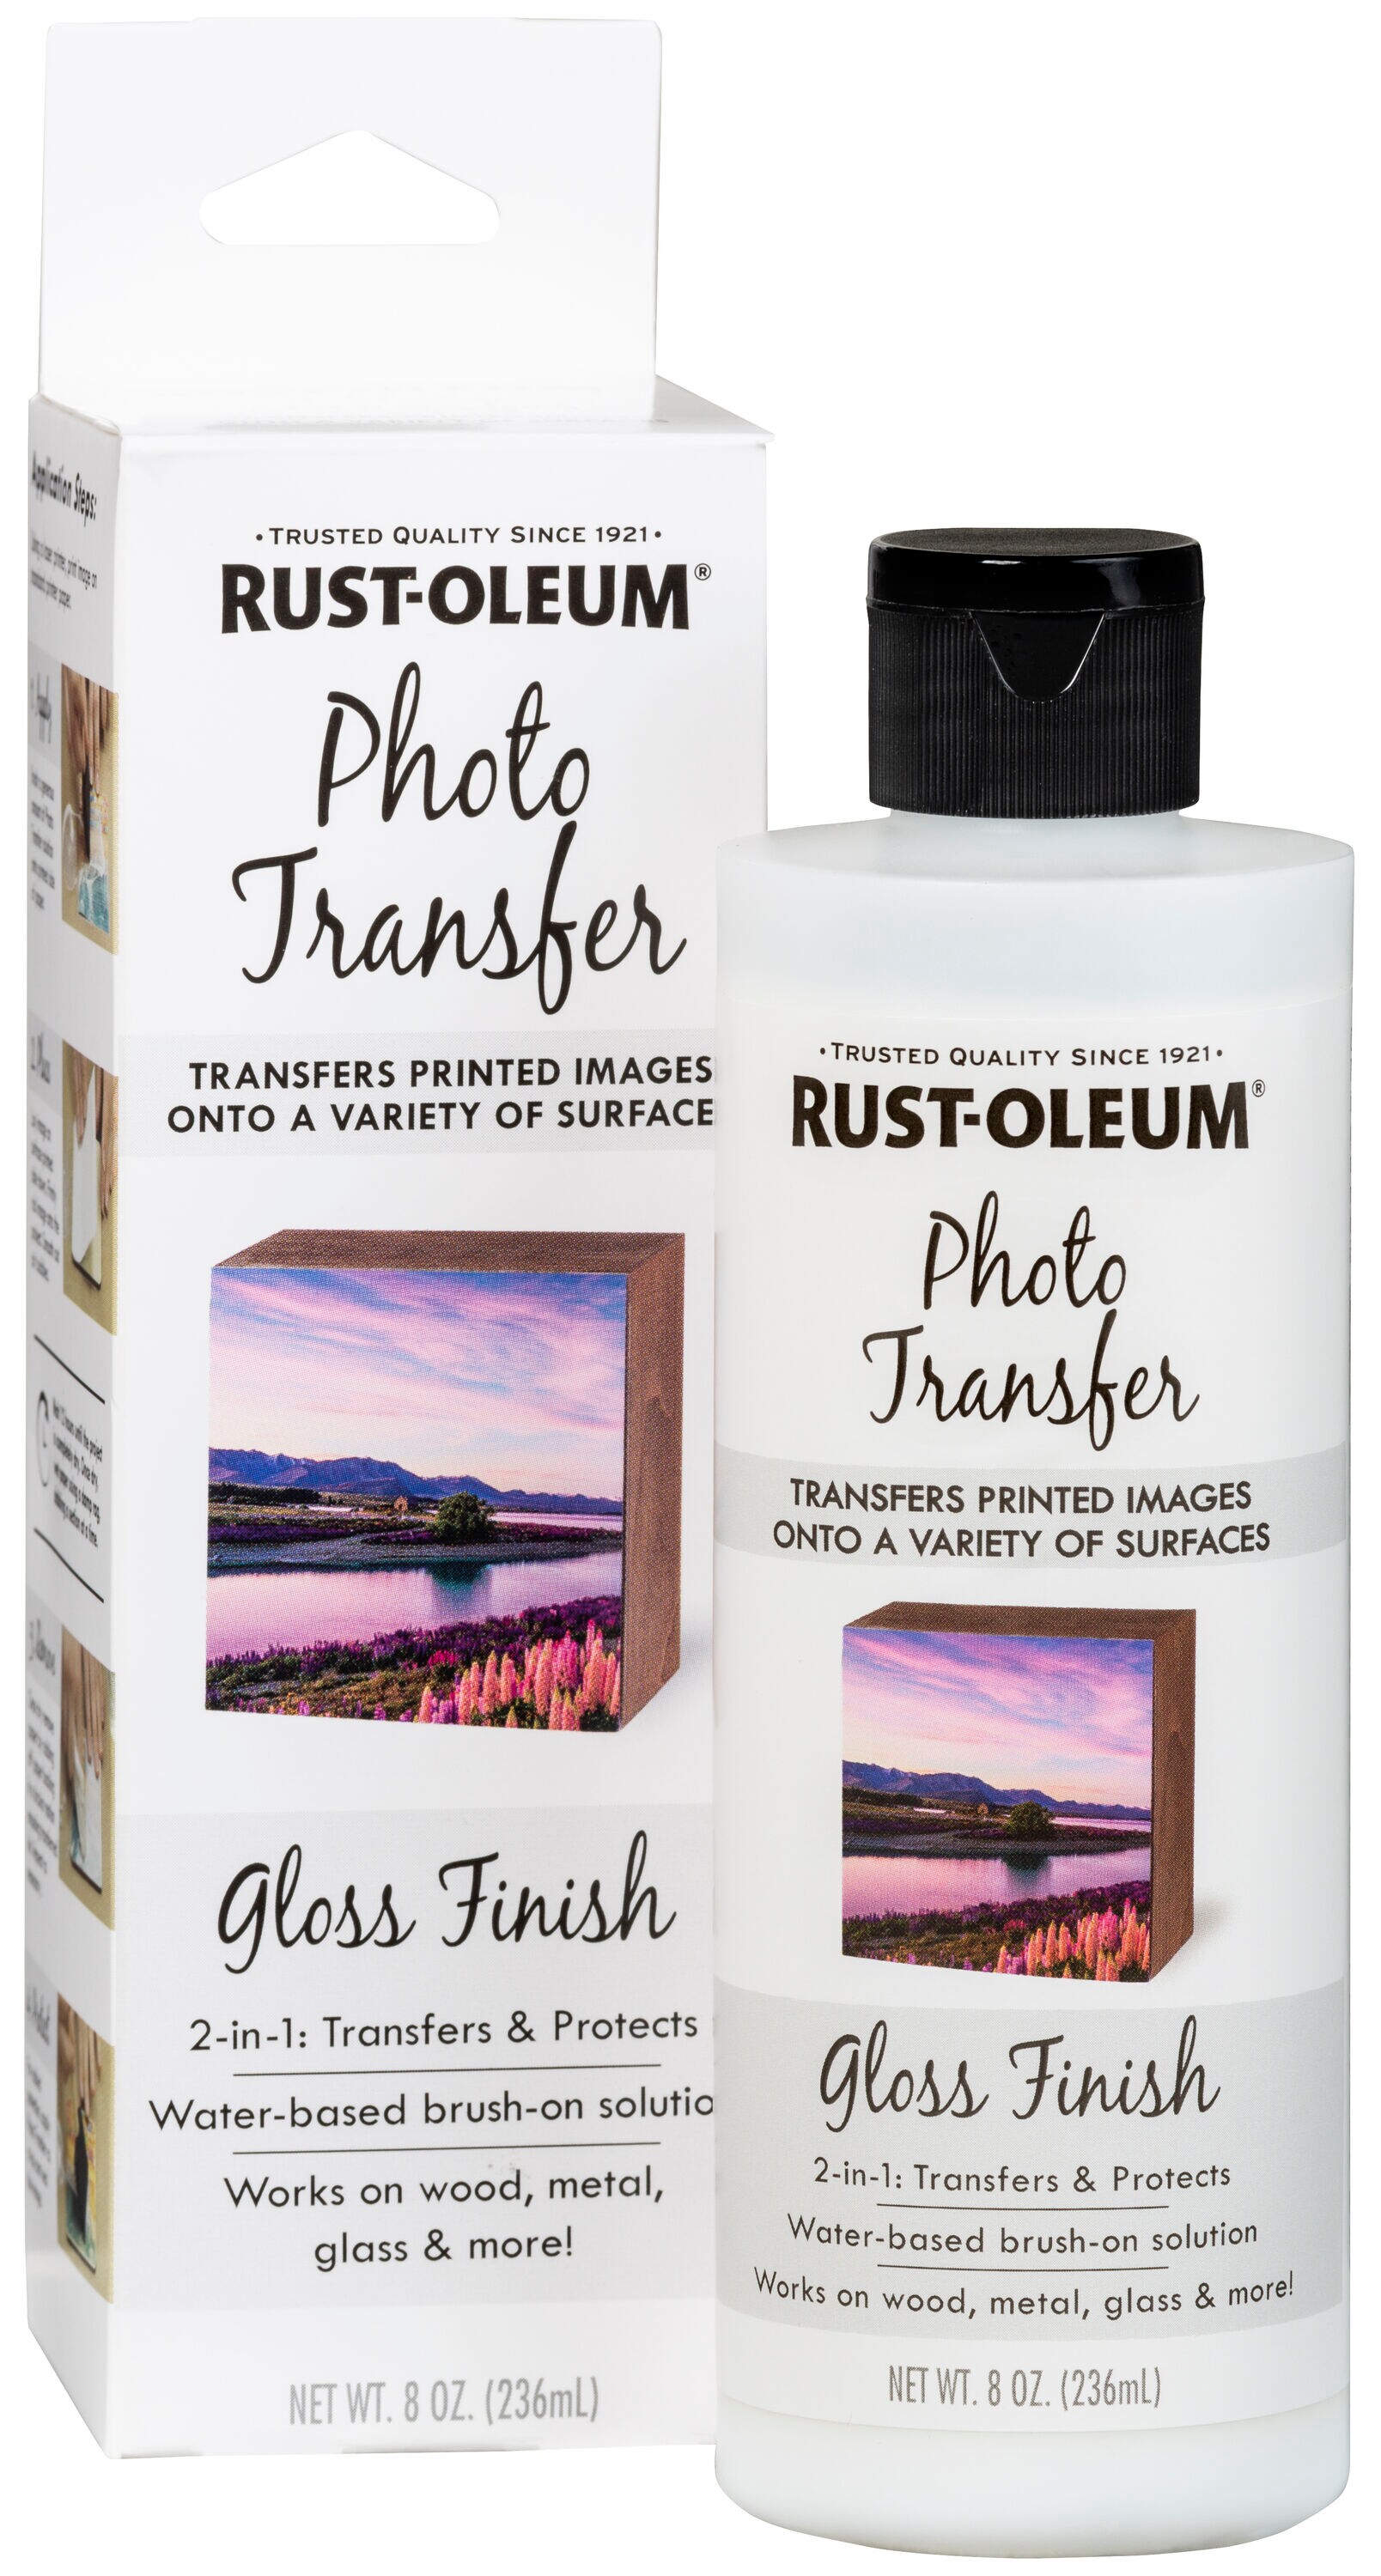 Rust-Oleum Imagine 4-Pack Rose Gold Acrylic Glitter Paint (Half